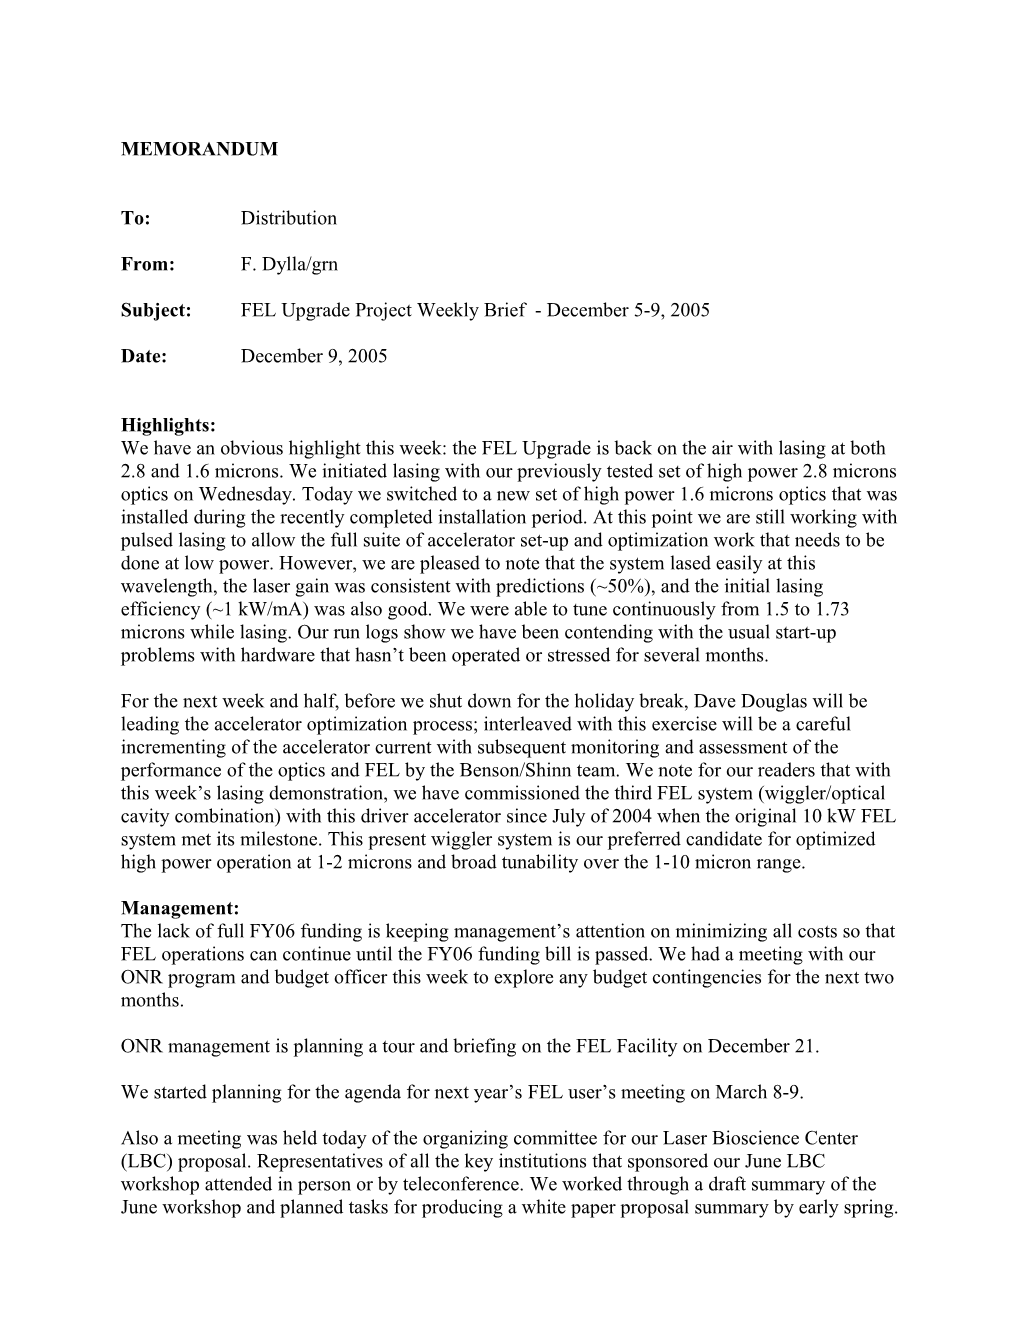 Subject:FEL Upgrade Project Weekly Brief - December 5-9, 2005